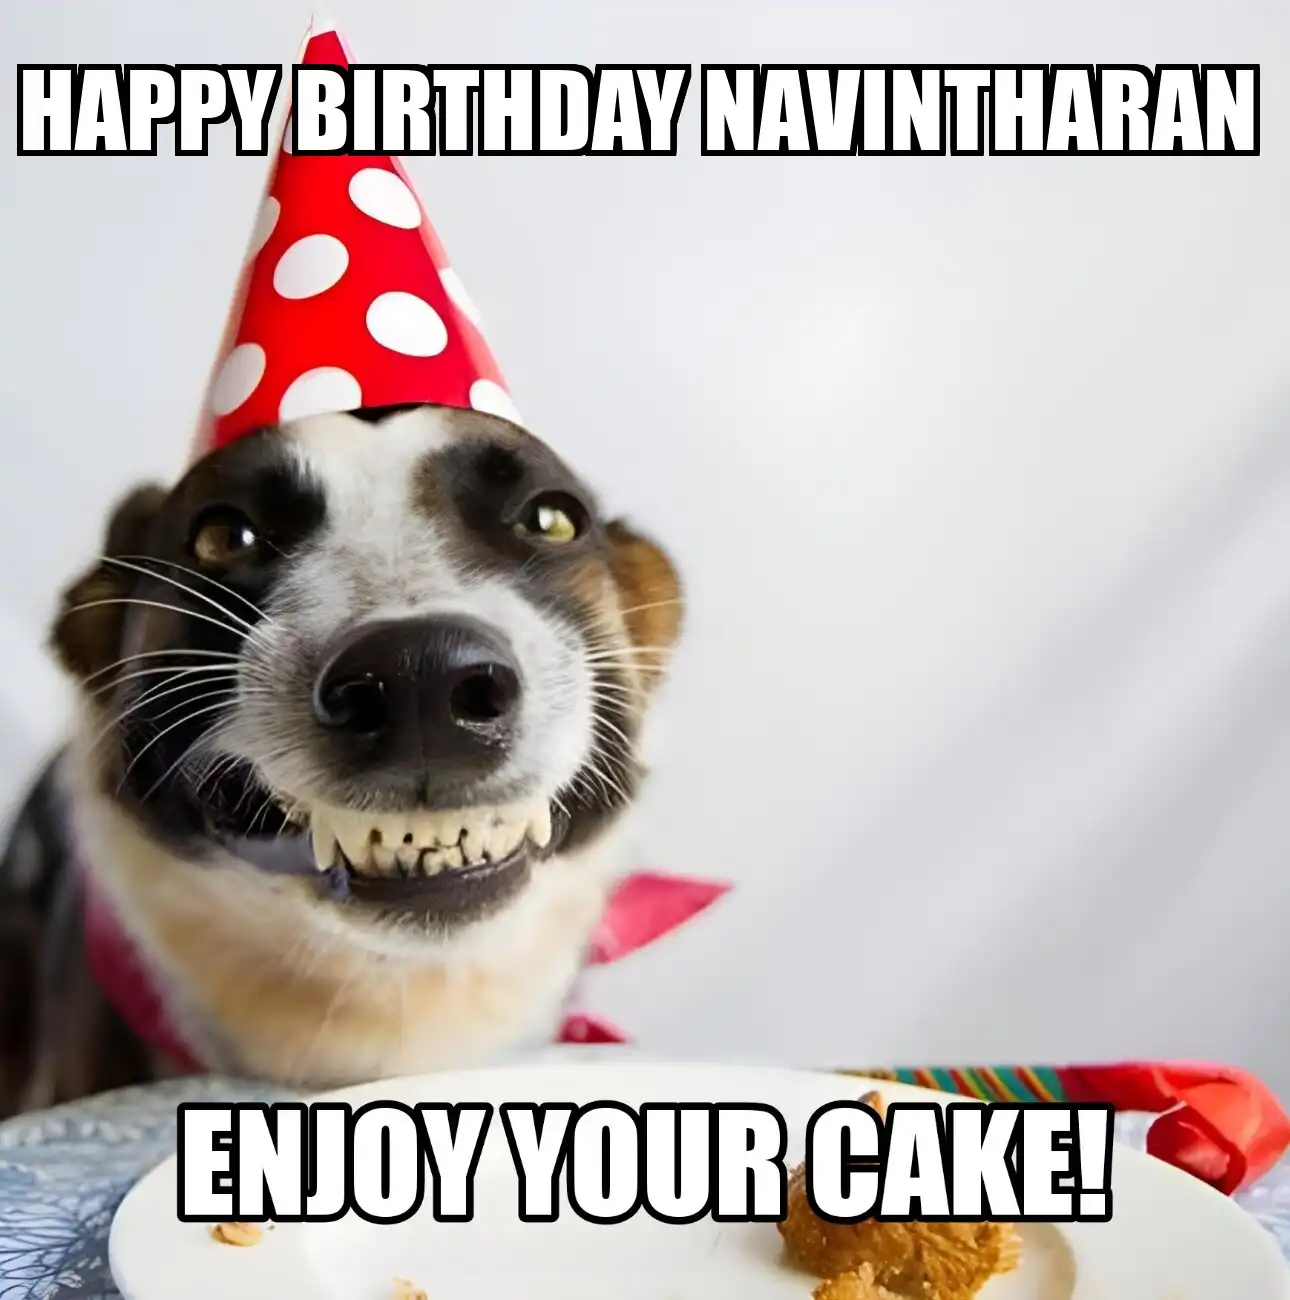 Happy Birthday Navintharan Enjoy Your Cake Dog Meme